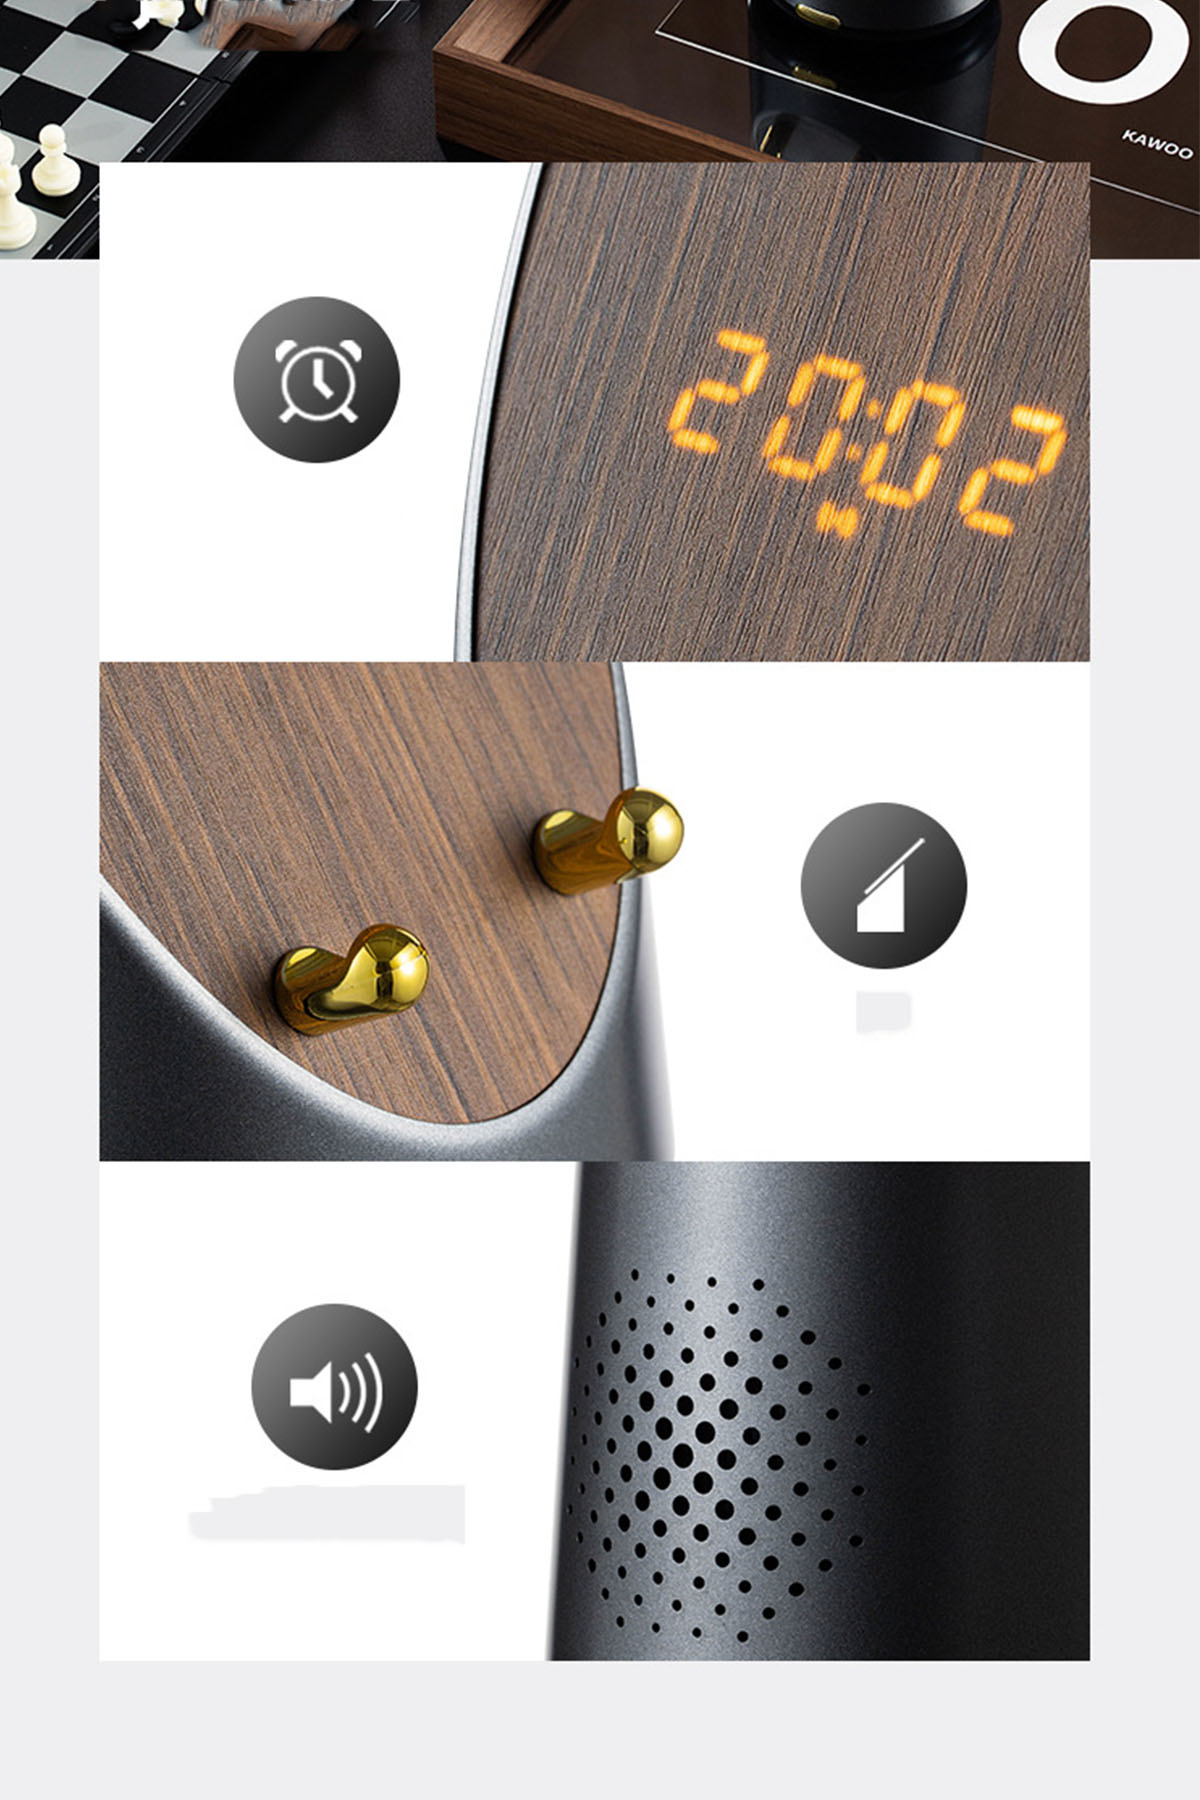 BRIGHTAKE Revolutionary Bluetooth-Lautsprecher, Braun Speaker Wireless 15W Alarm Clock Charging Induction